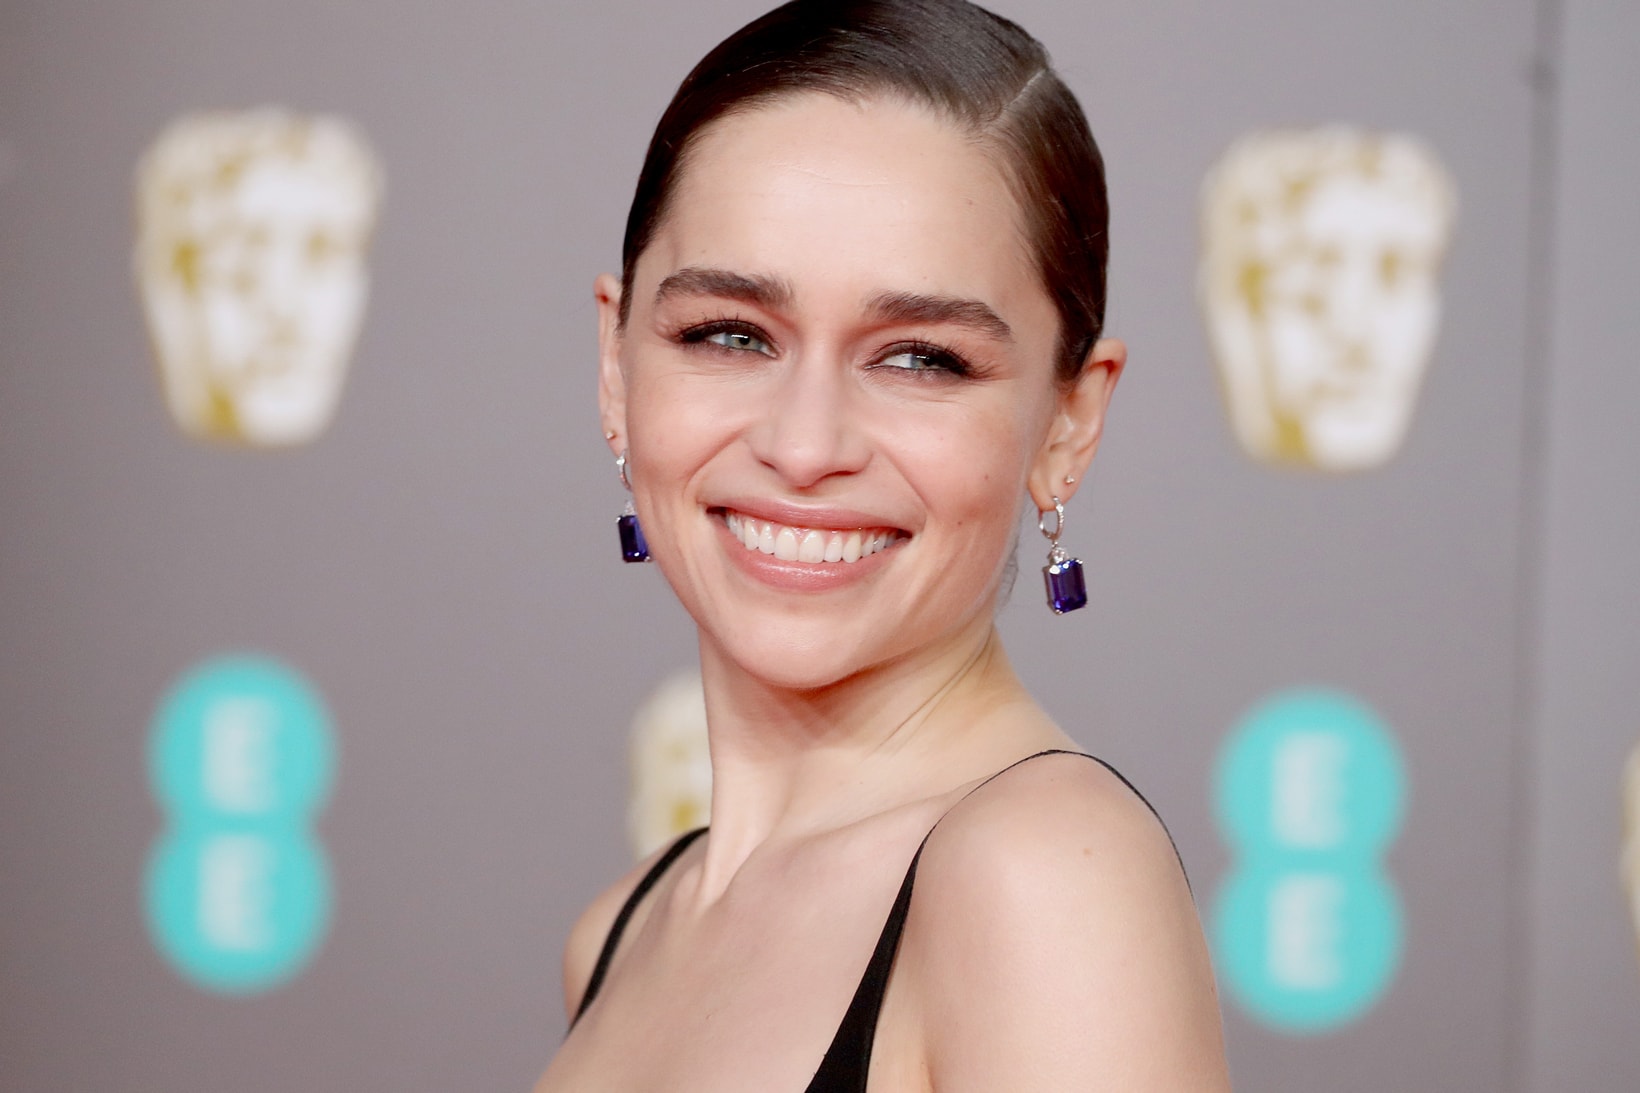 Emilia Clarke será parte del elenco de “Secret Invasion”, la nueva